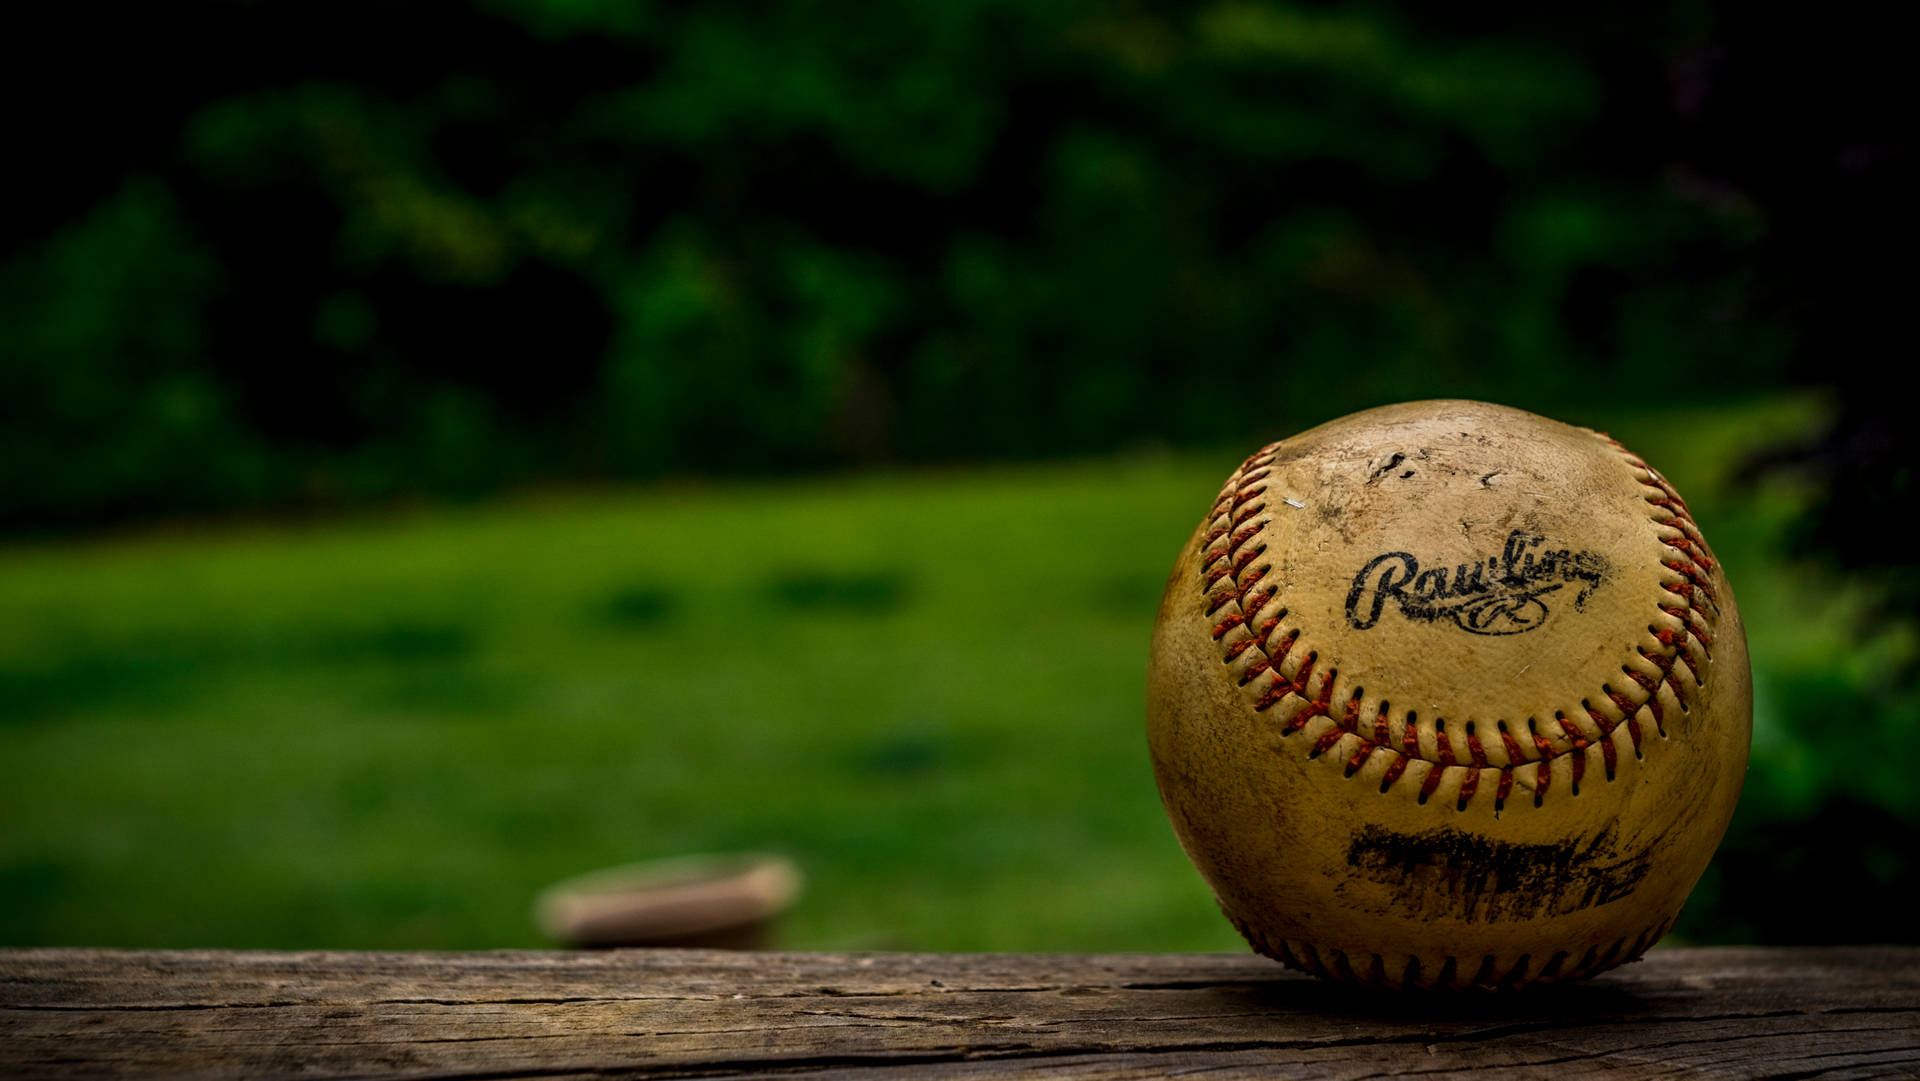 Cool Baseball Ball On Wood Surface Background